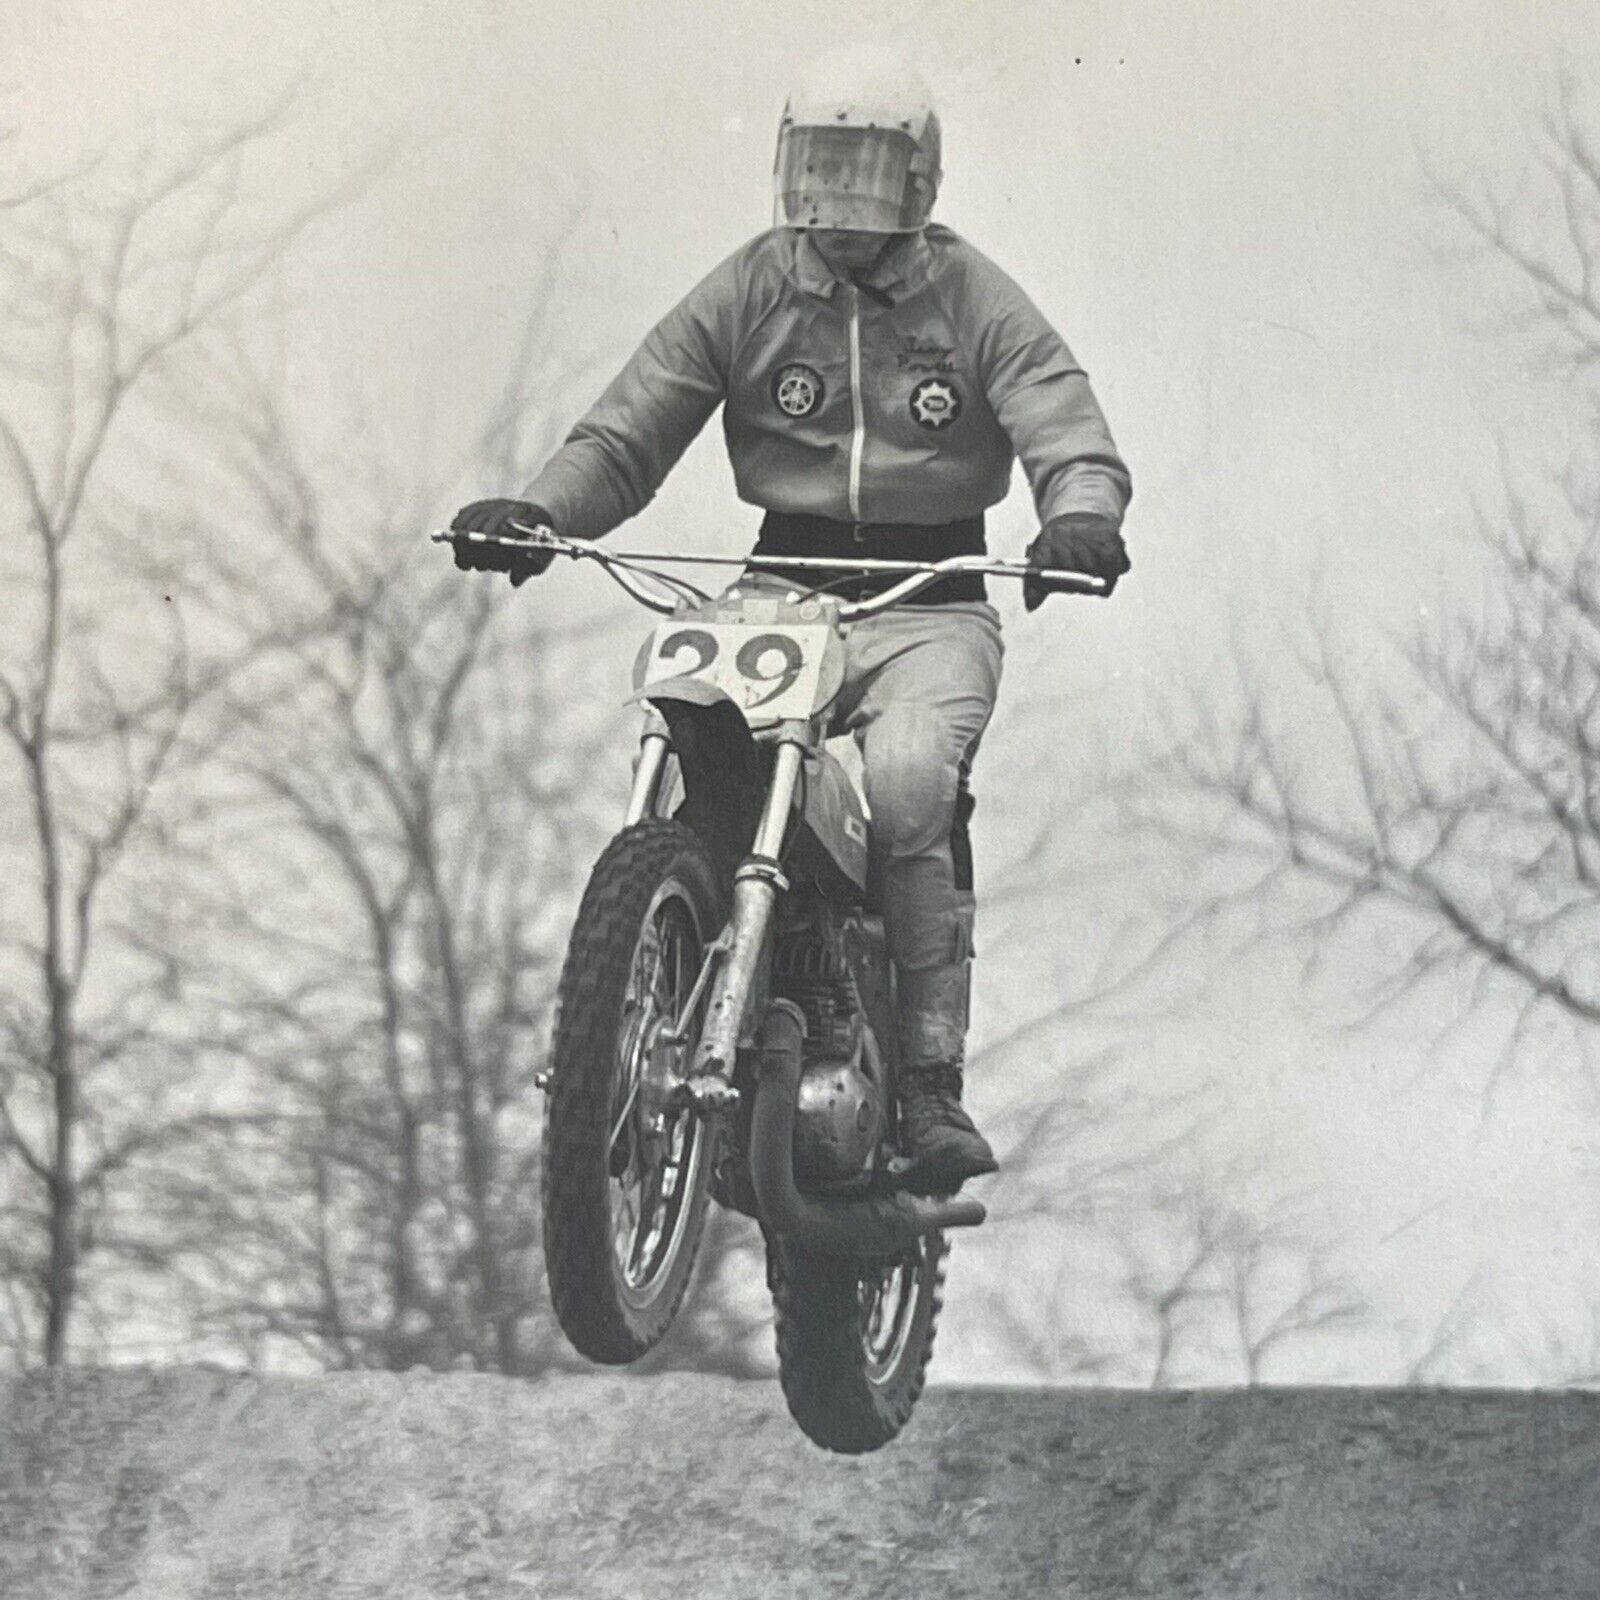 dirt bike motorcycle jumping mud vintage photograph